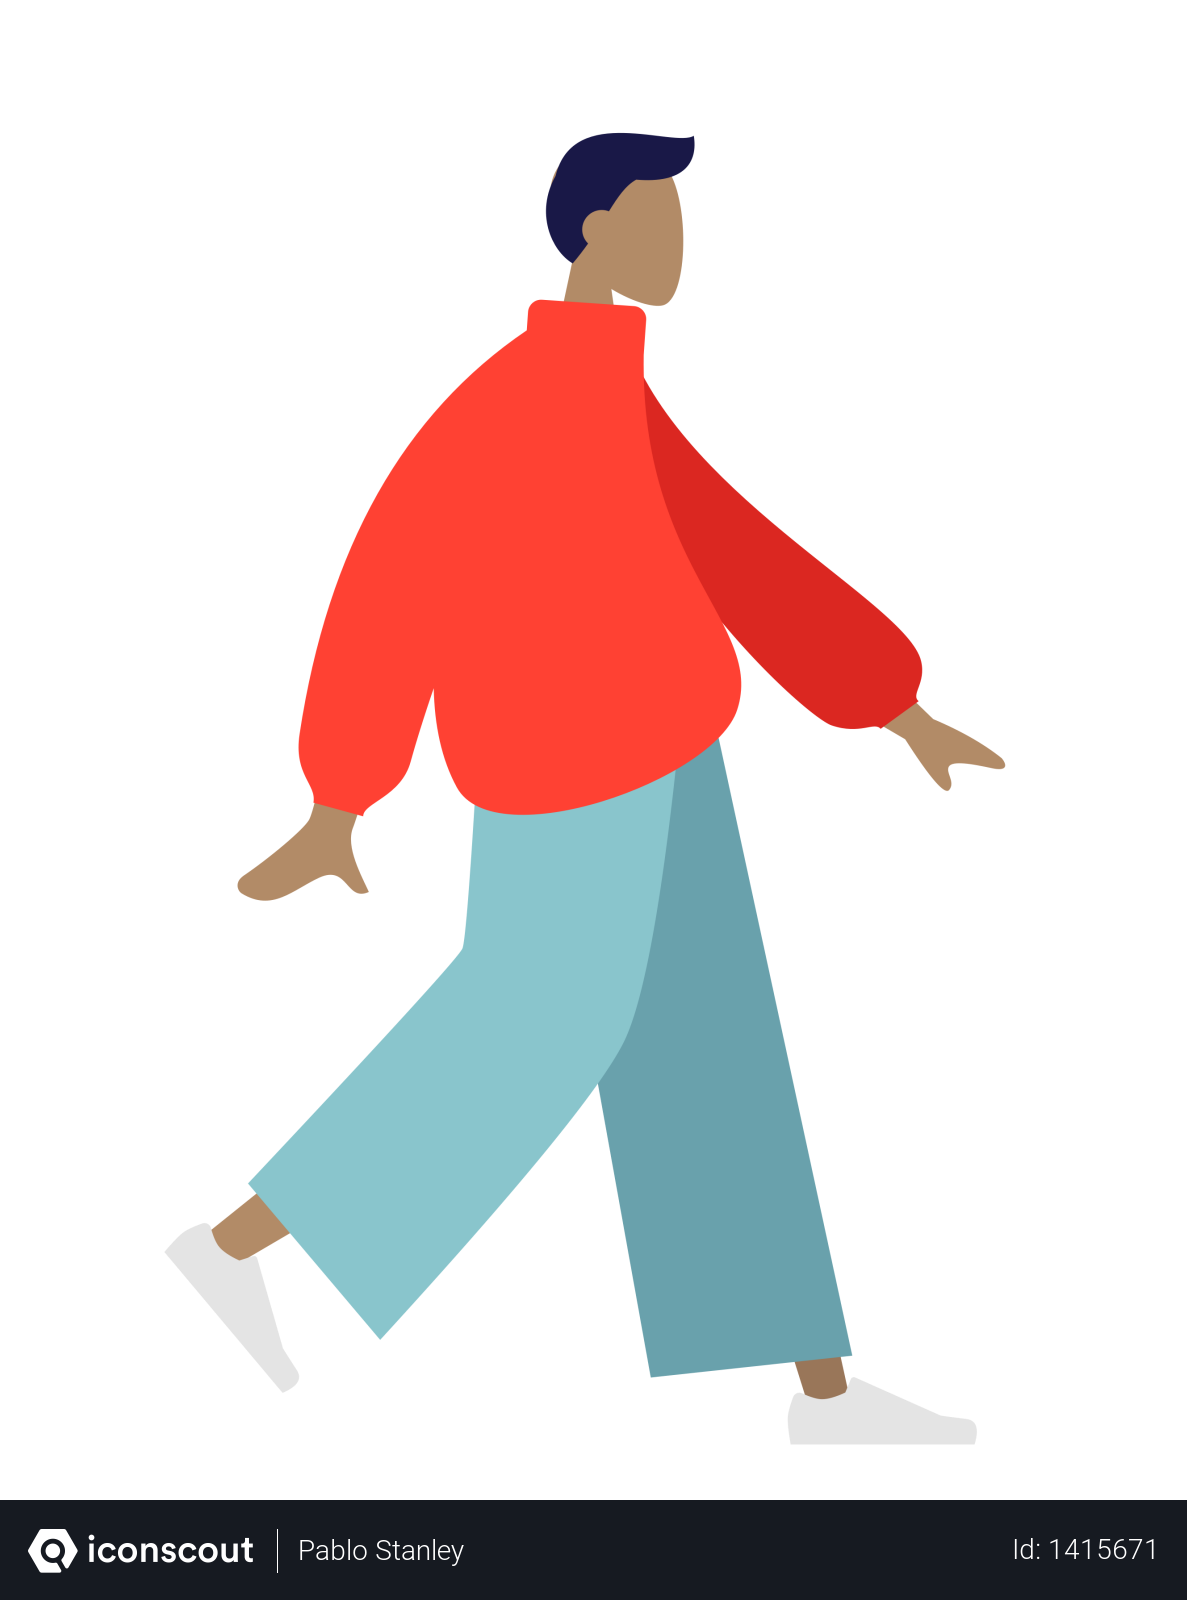 Free Walking man Illustration download in PNG & Vector format